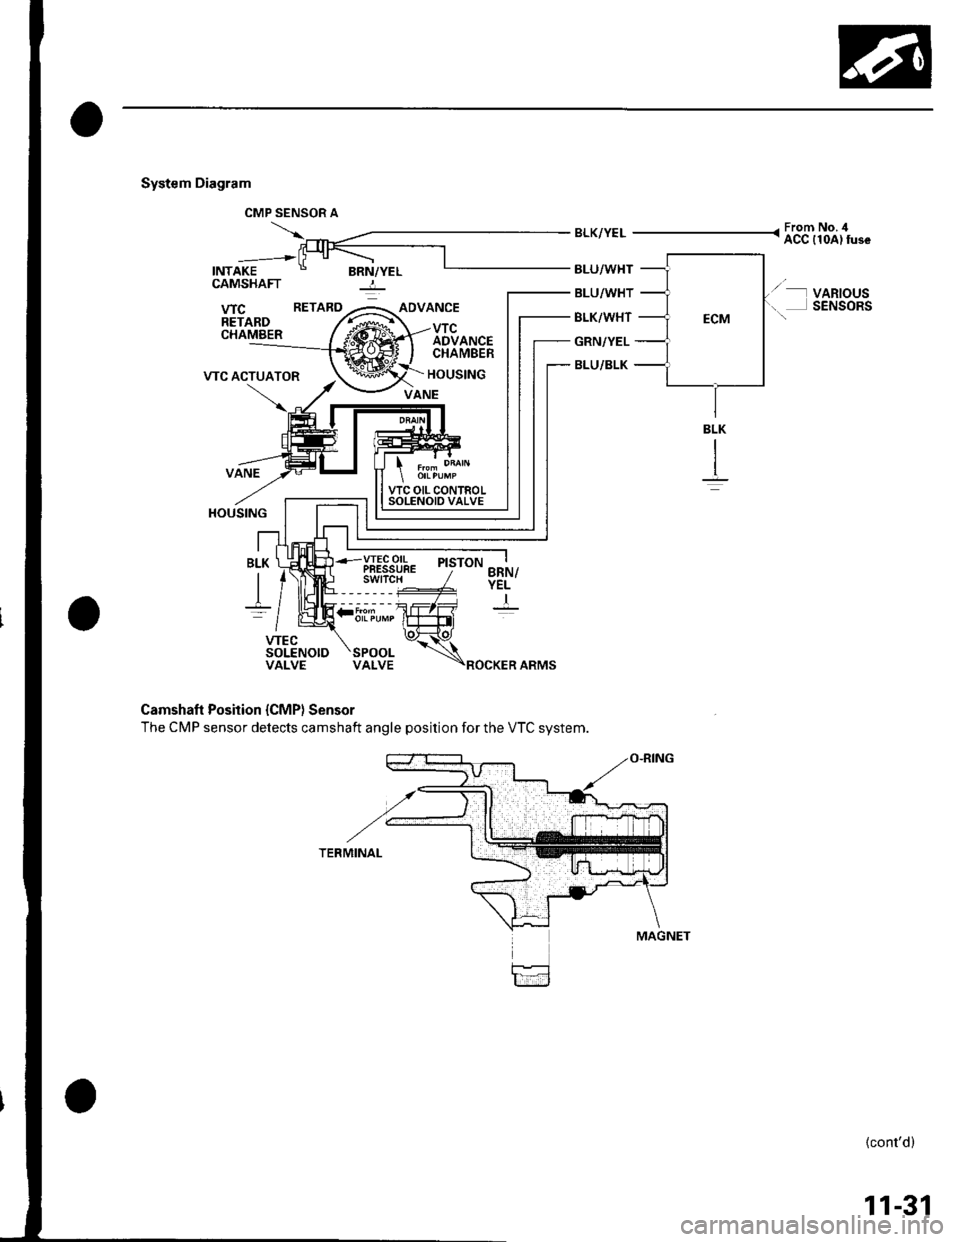 HONDA CIVIC 2003 7.G Owners Manual System Diagram
INTAKE
CMP SENSOR A
BRN/YELBLU/WHT
BLU/WHT
BLK/WHT
GRN/YEL
BLU/BLK
From No. ilACC {10A) fuse
VARIOUSSENSORS
CAMSHAFT -:-
BLK
It
Camshaft Position {CMP} Sensor
The CMP sensor detects cam